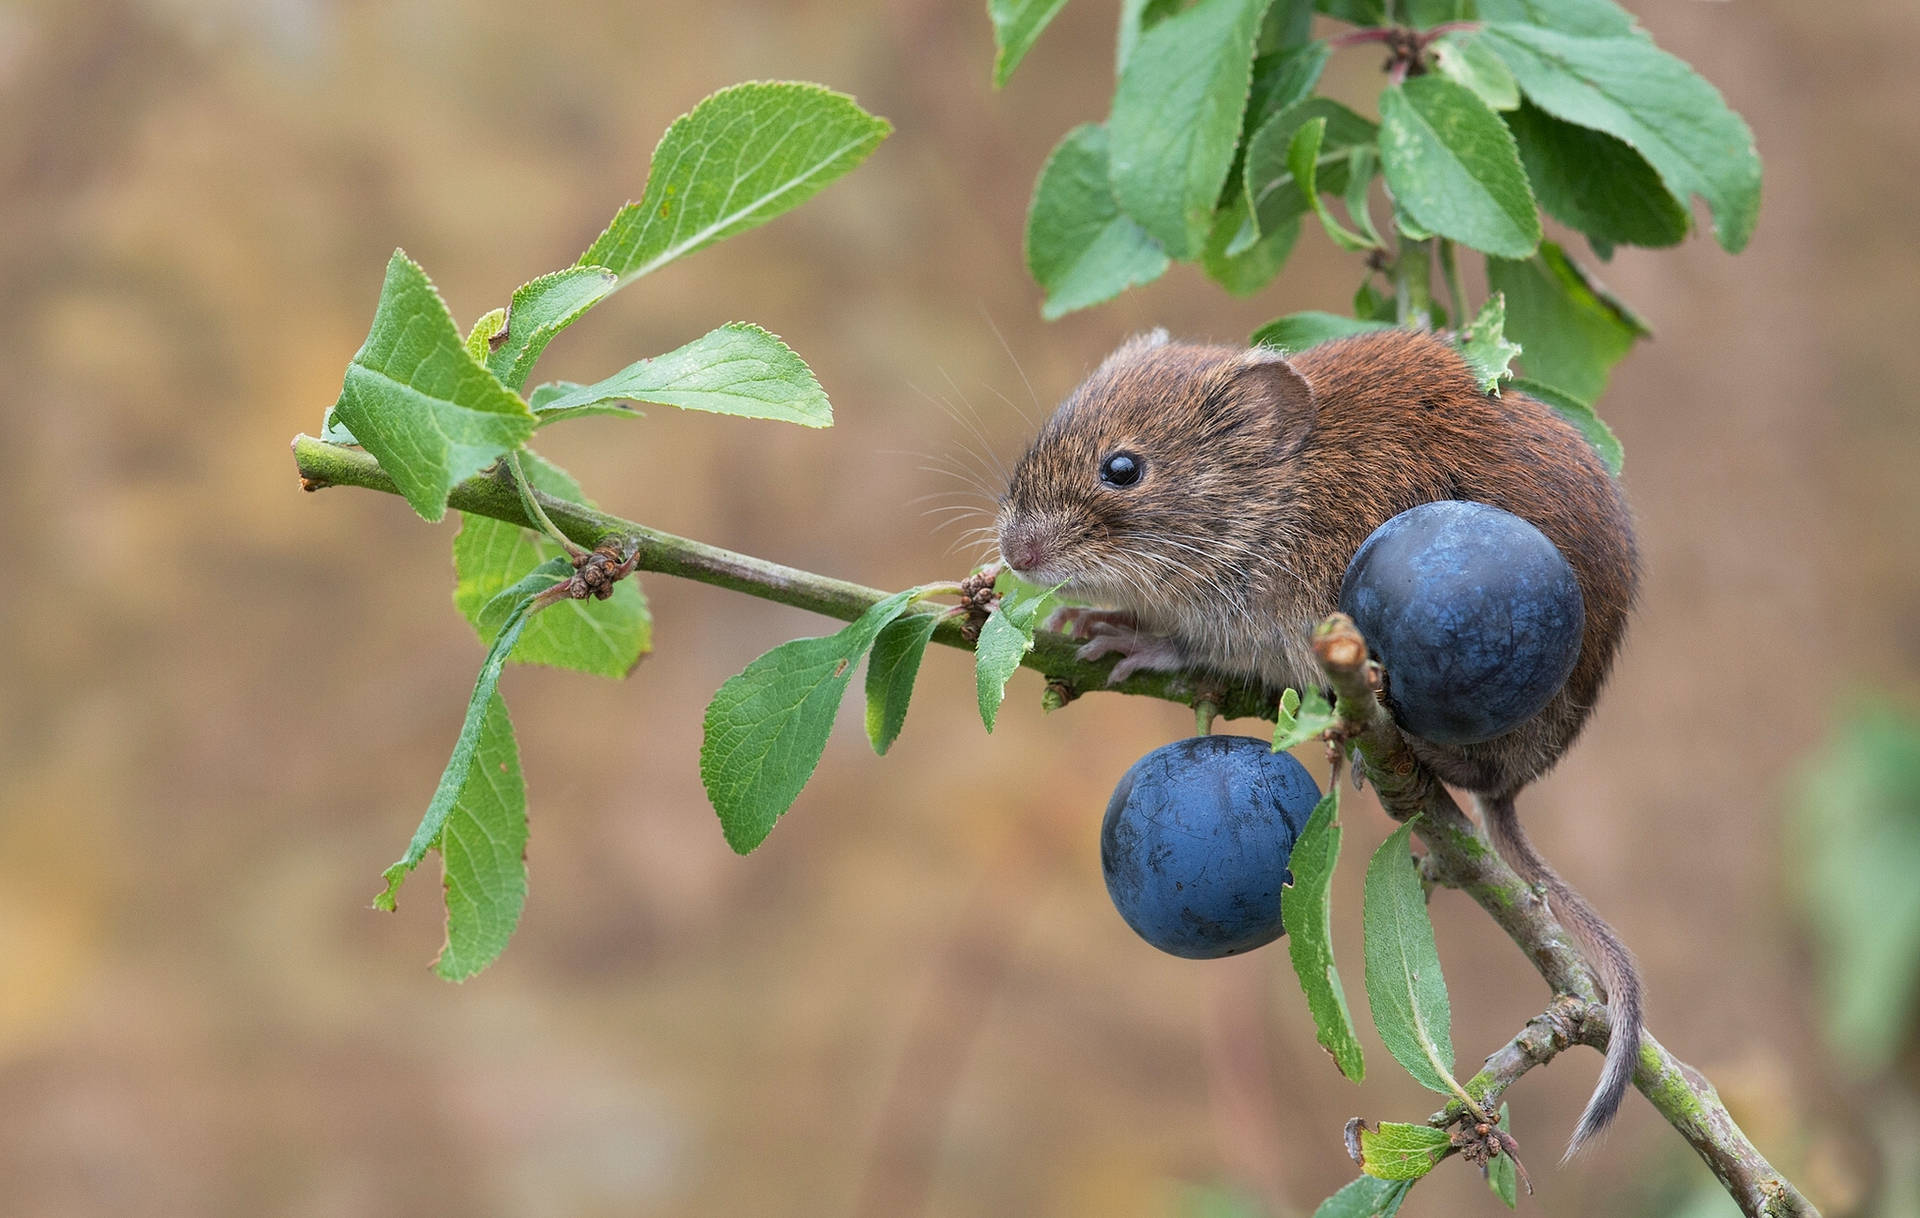 Mouse Feeding On Blueberry